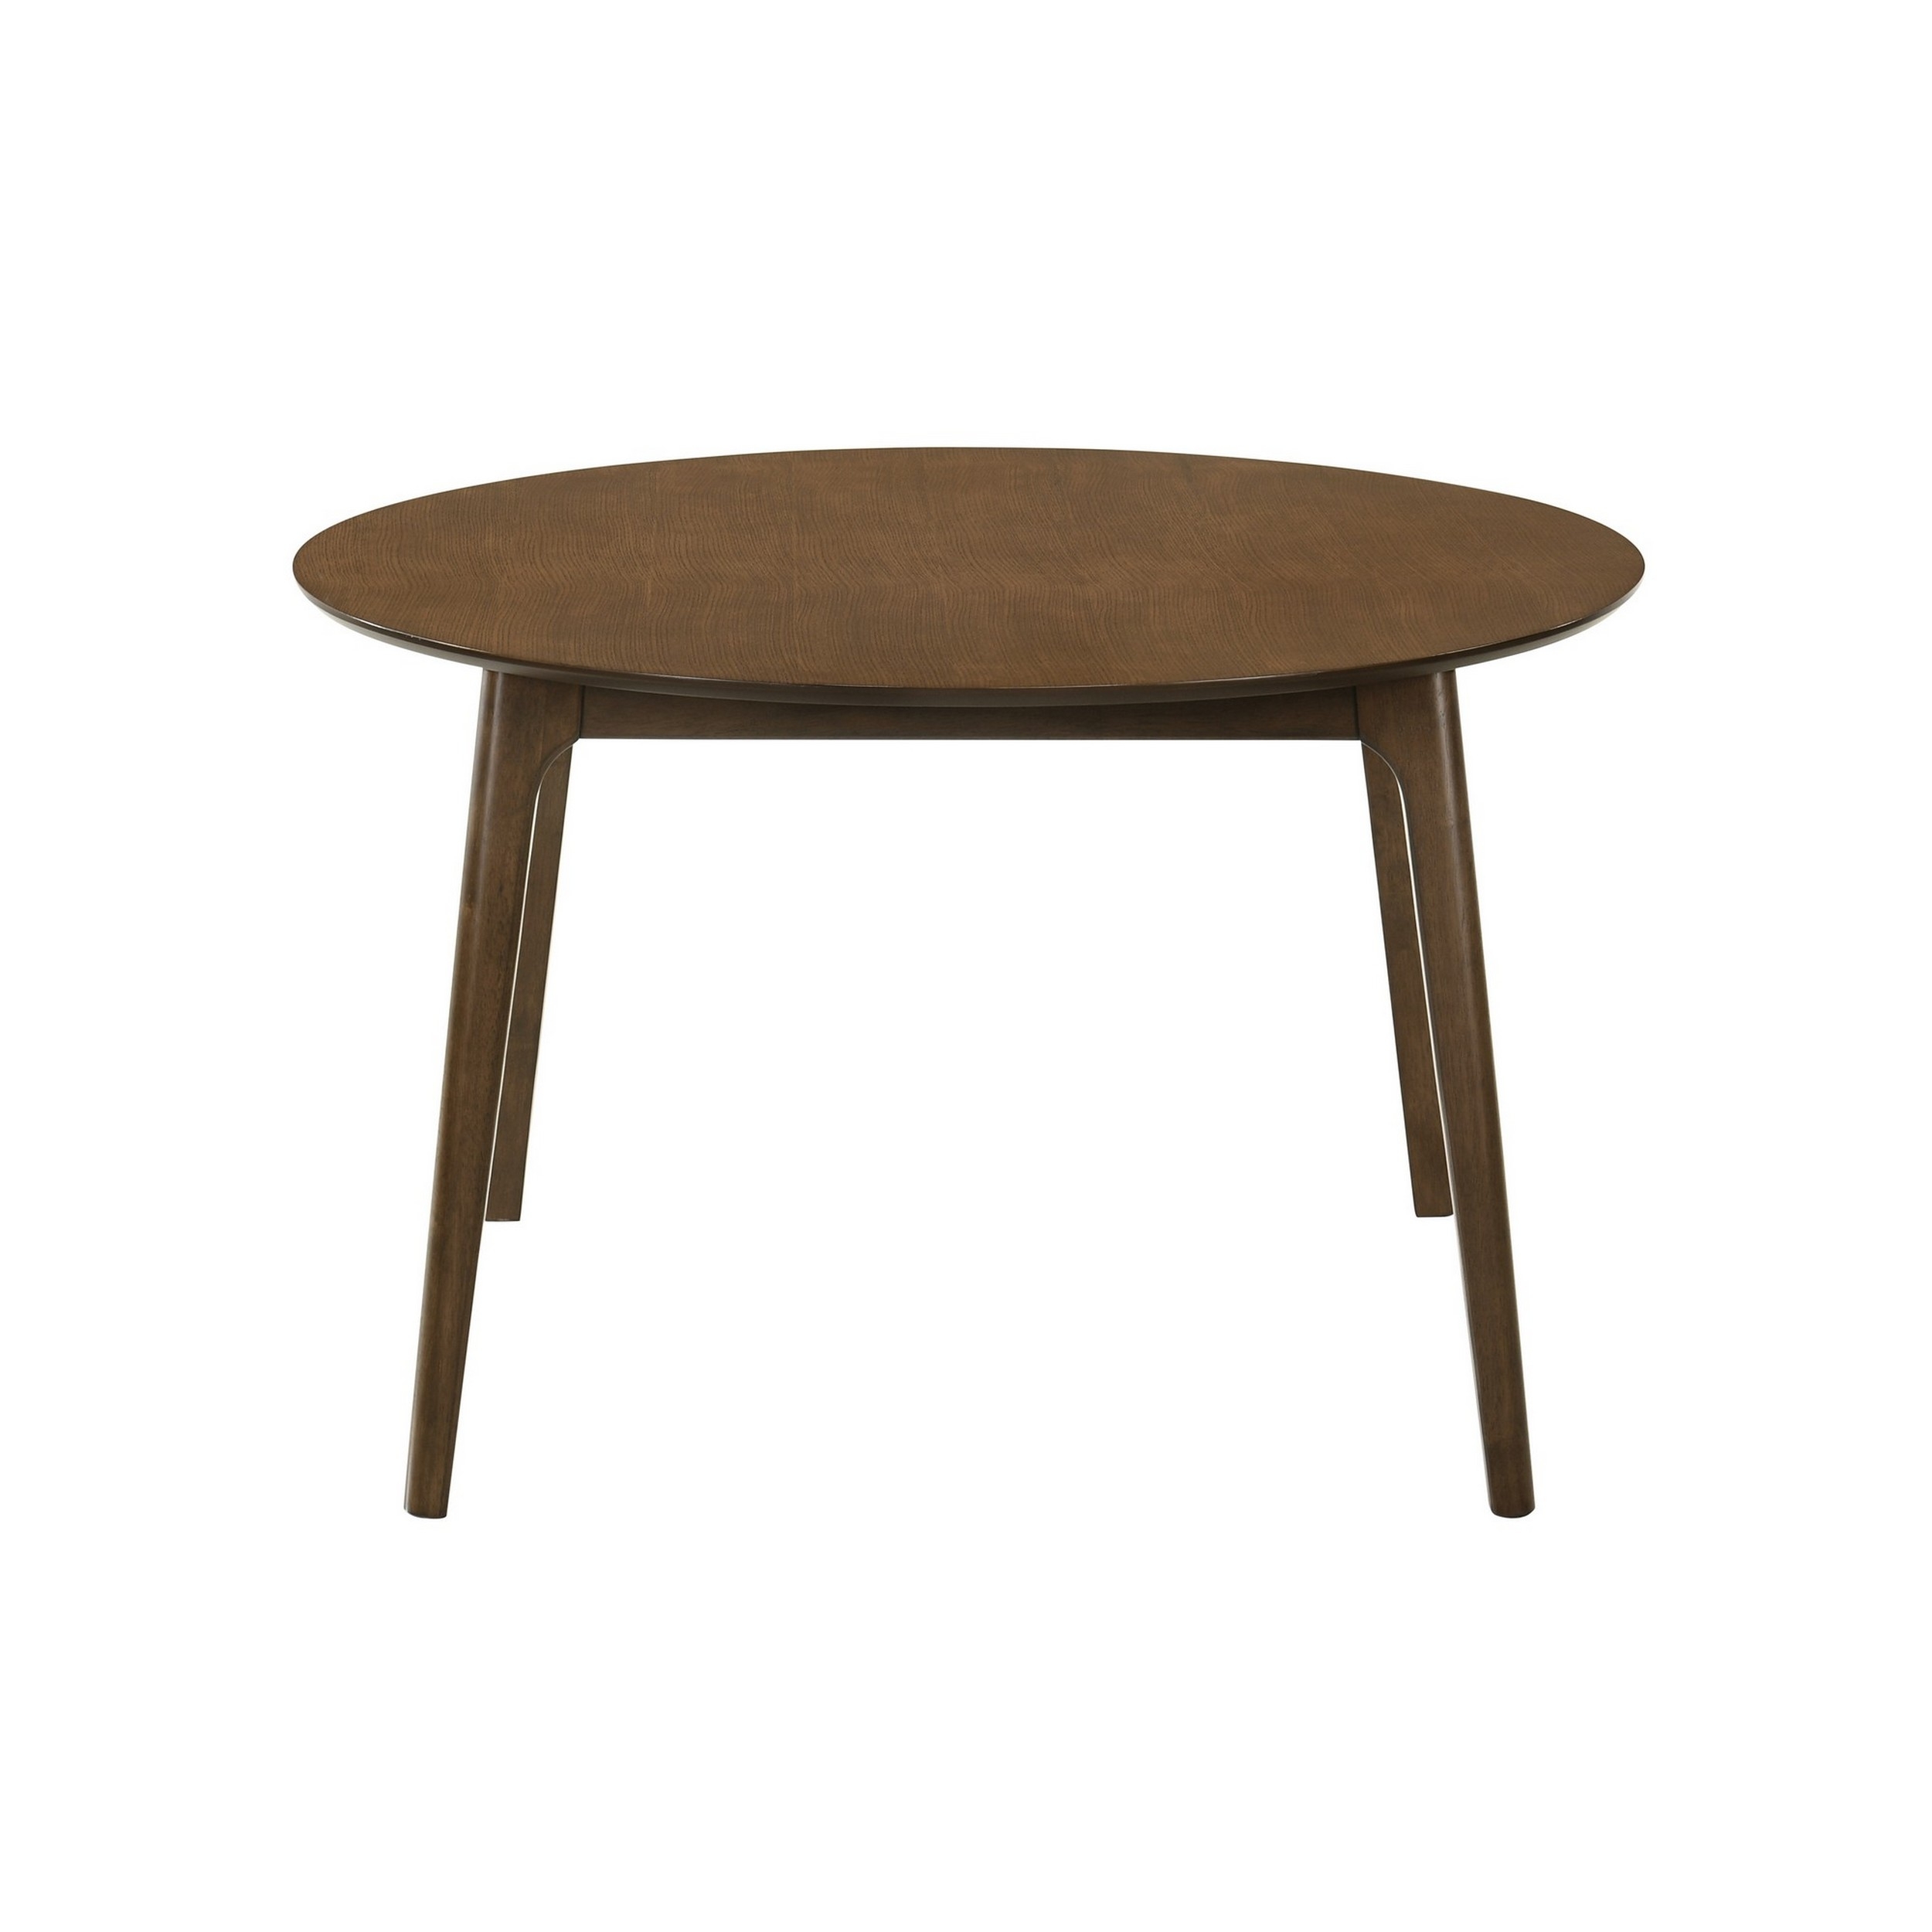 Kiq 48 Inch Dining Table, Wood, Round Tabletop, Angled Legs, Walnut Brown - Saltoro Sherpi